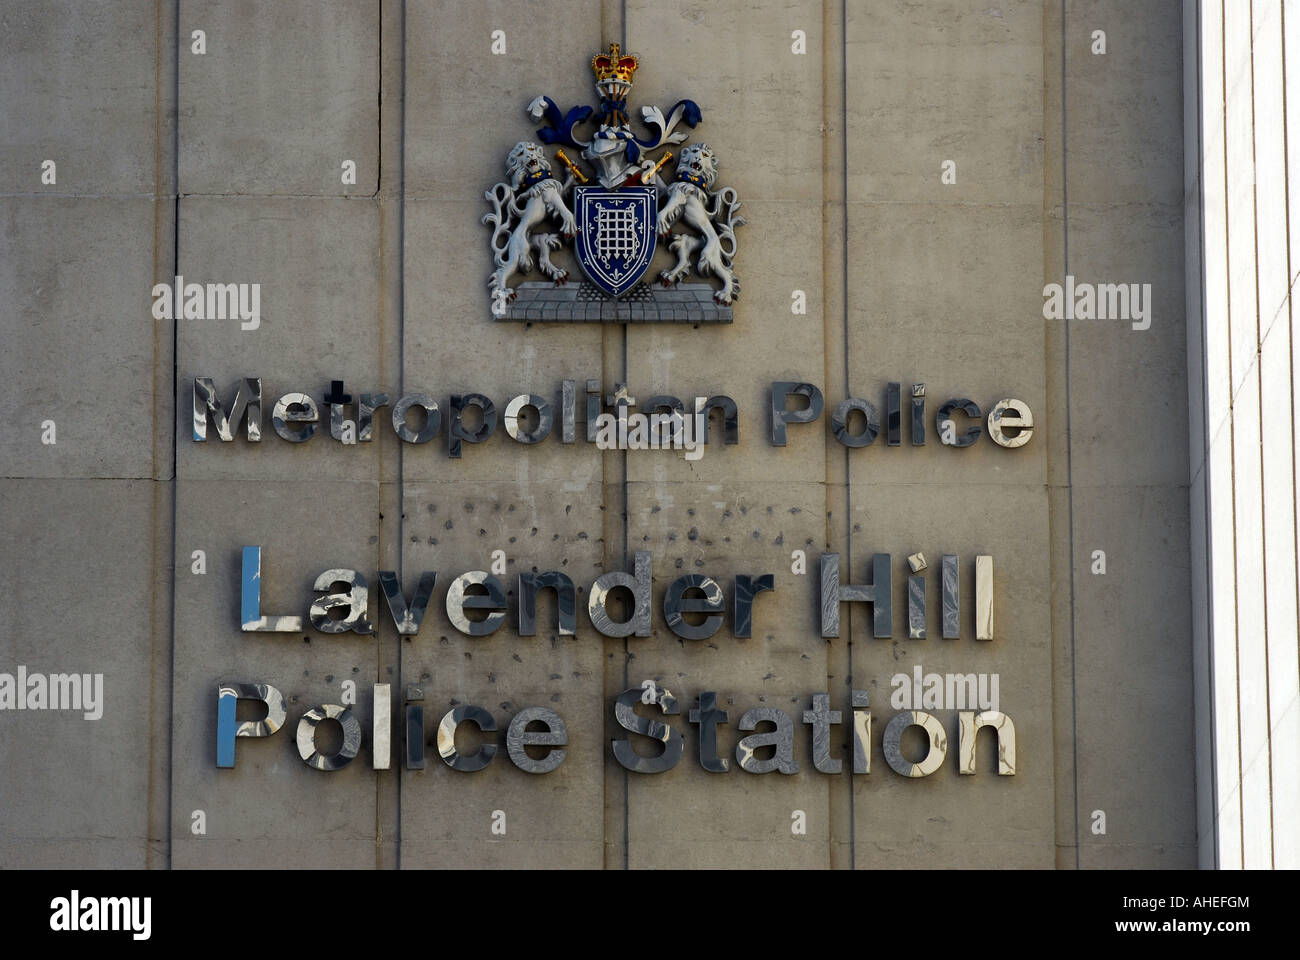 Lavender Hill Police Station, Clapham, London, UK. Stock Photo